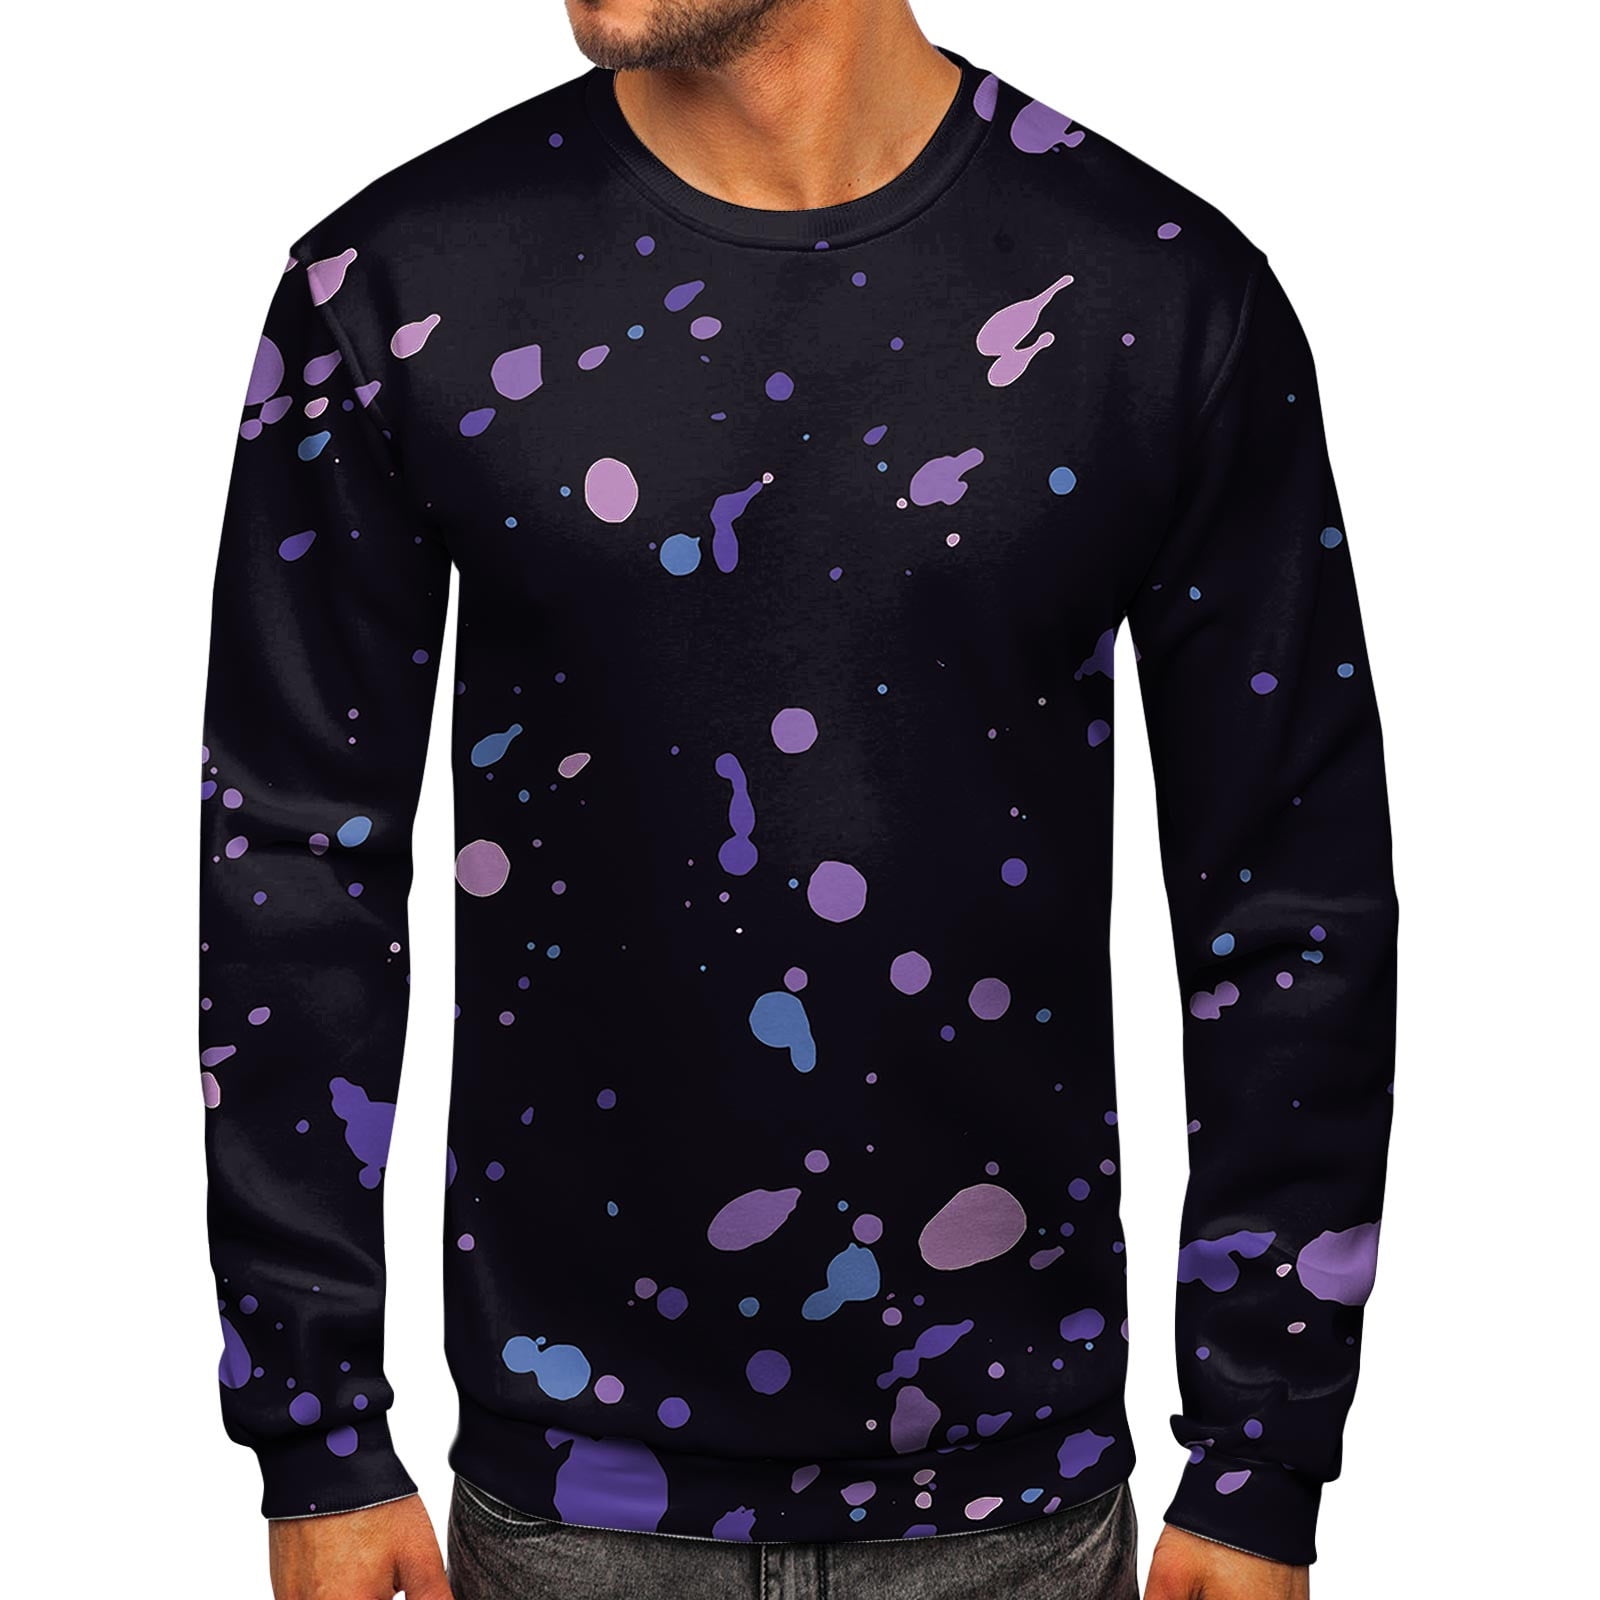 LEEy-world Sweatshirts for Men Hoodie-Ultrasoft Breathable & Odor